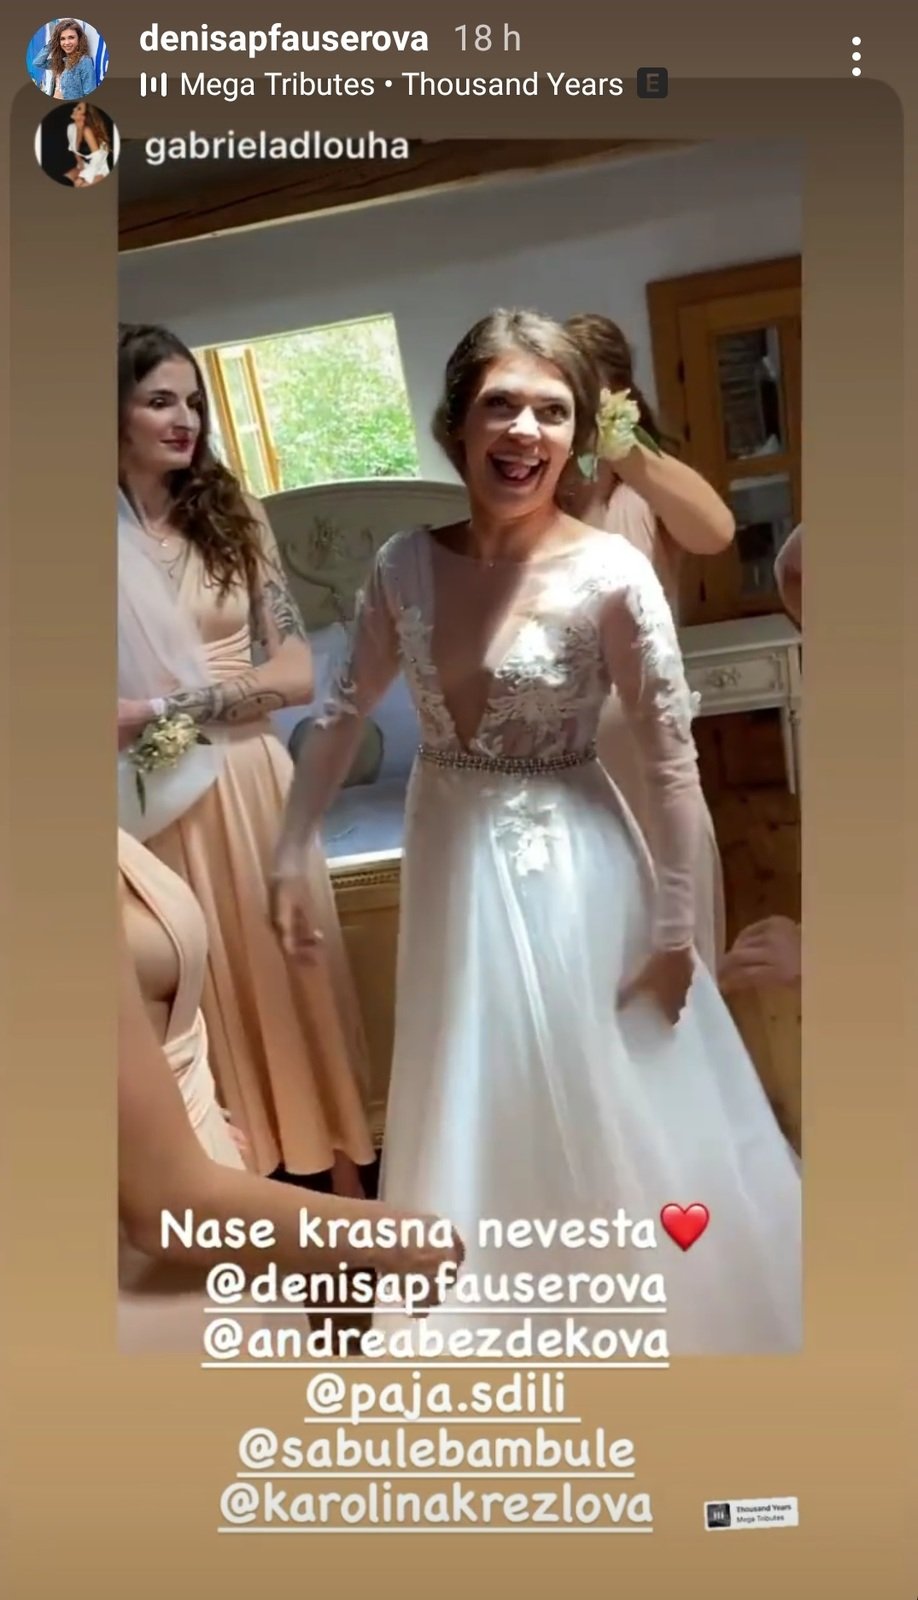 Denisa Pfauserová se vdala